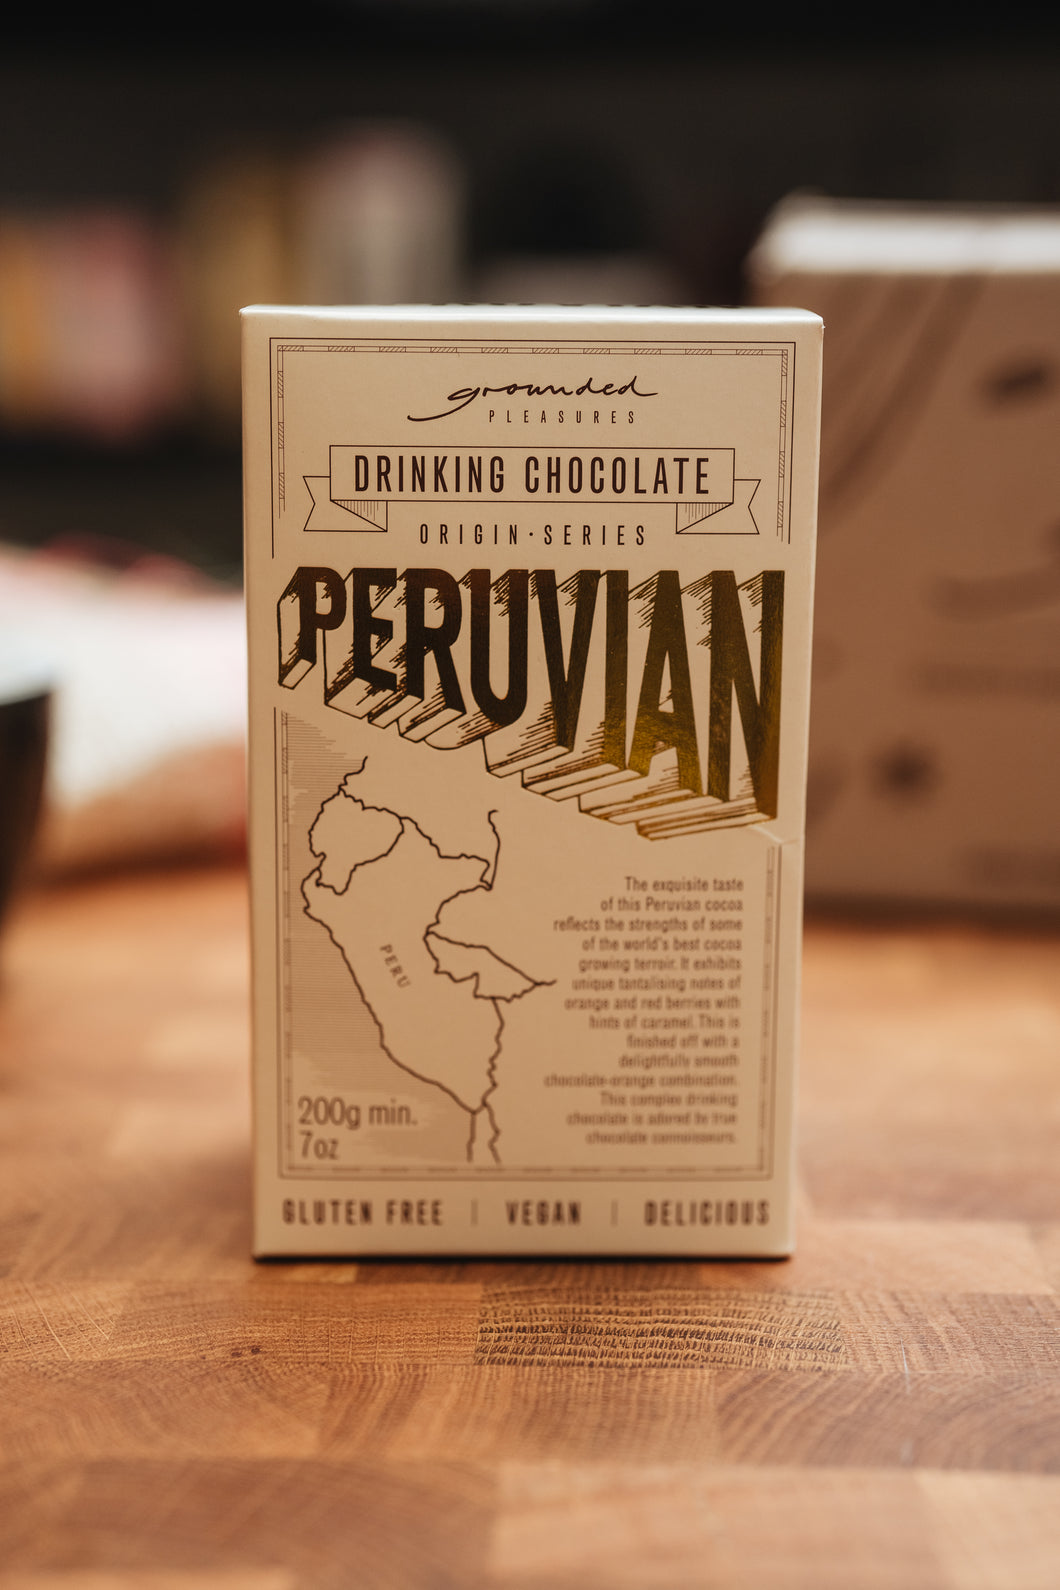 Peruvian Drinking Chocolate - Grounded Pleasures